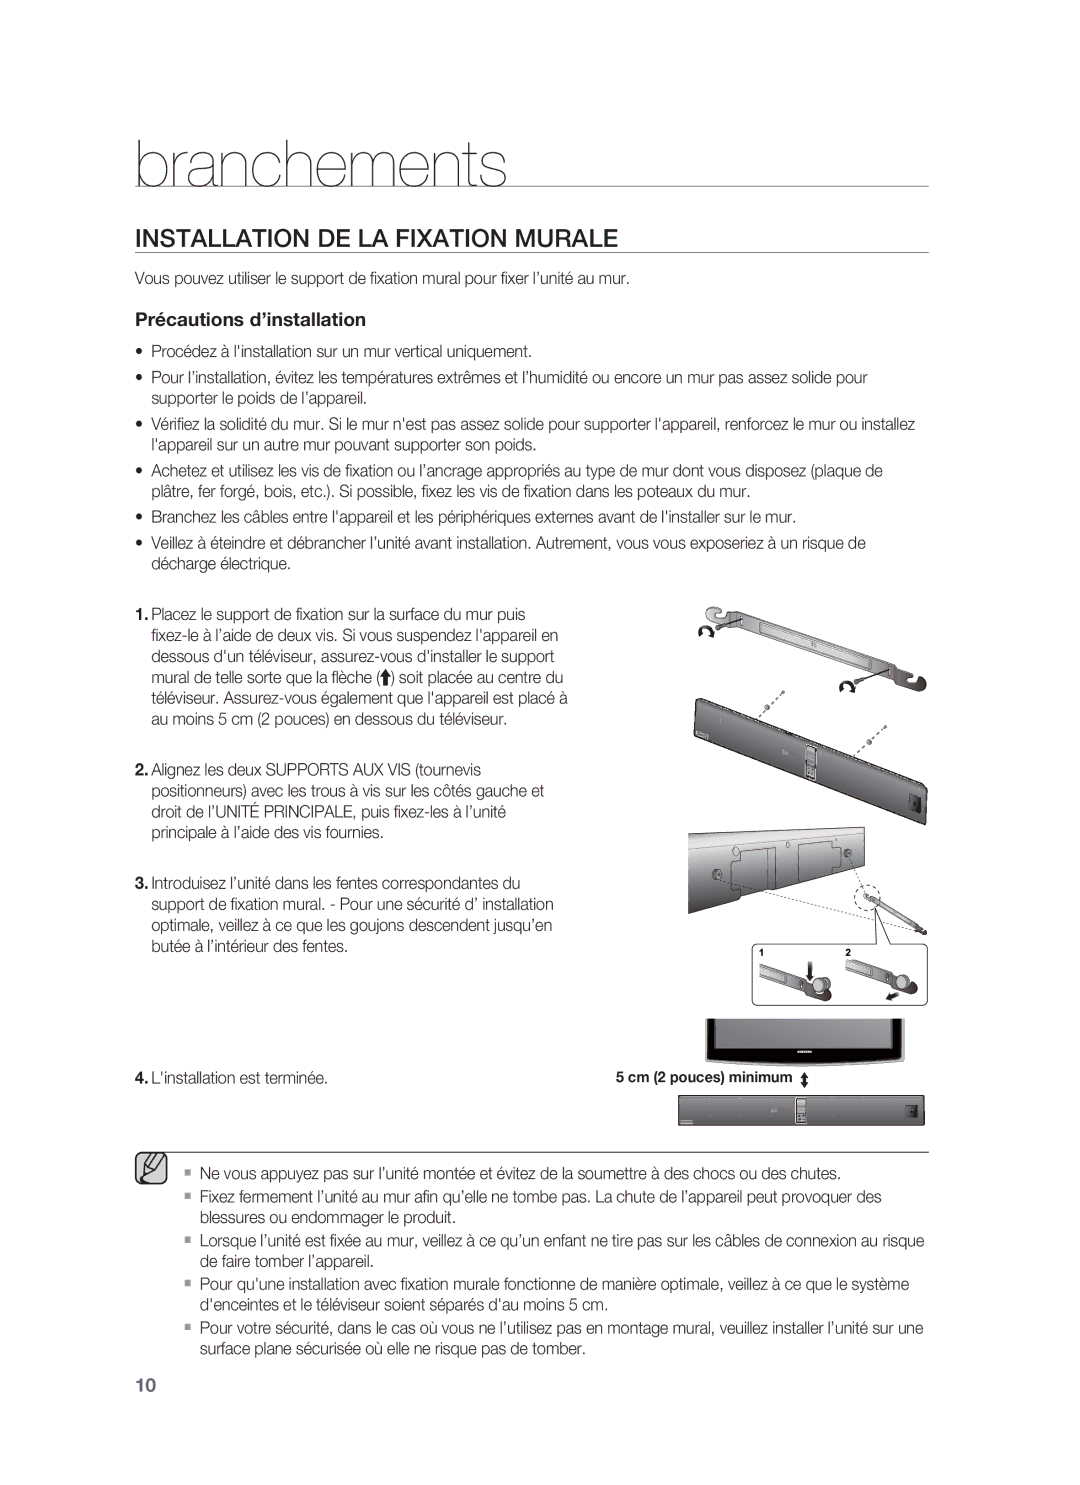 Samsung HW-F850/ZF manual Branchements, Installation DE LA Fixation Murale, Linstallation est terminée 